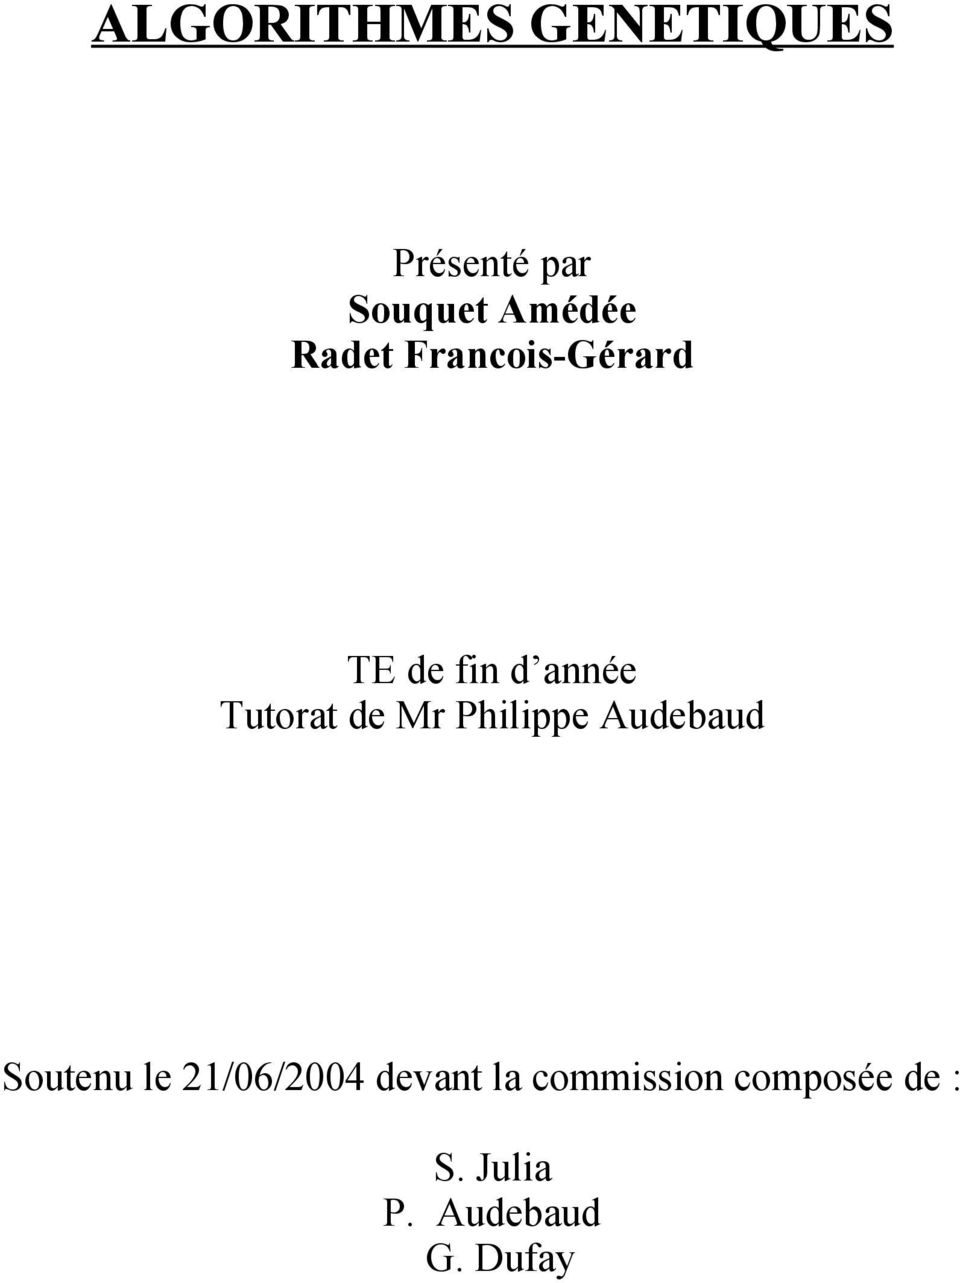 Mr Philippe Audebaud Soutenu le 21/06/2004 devant la